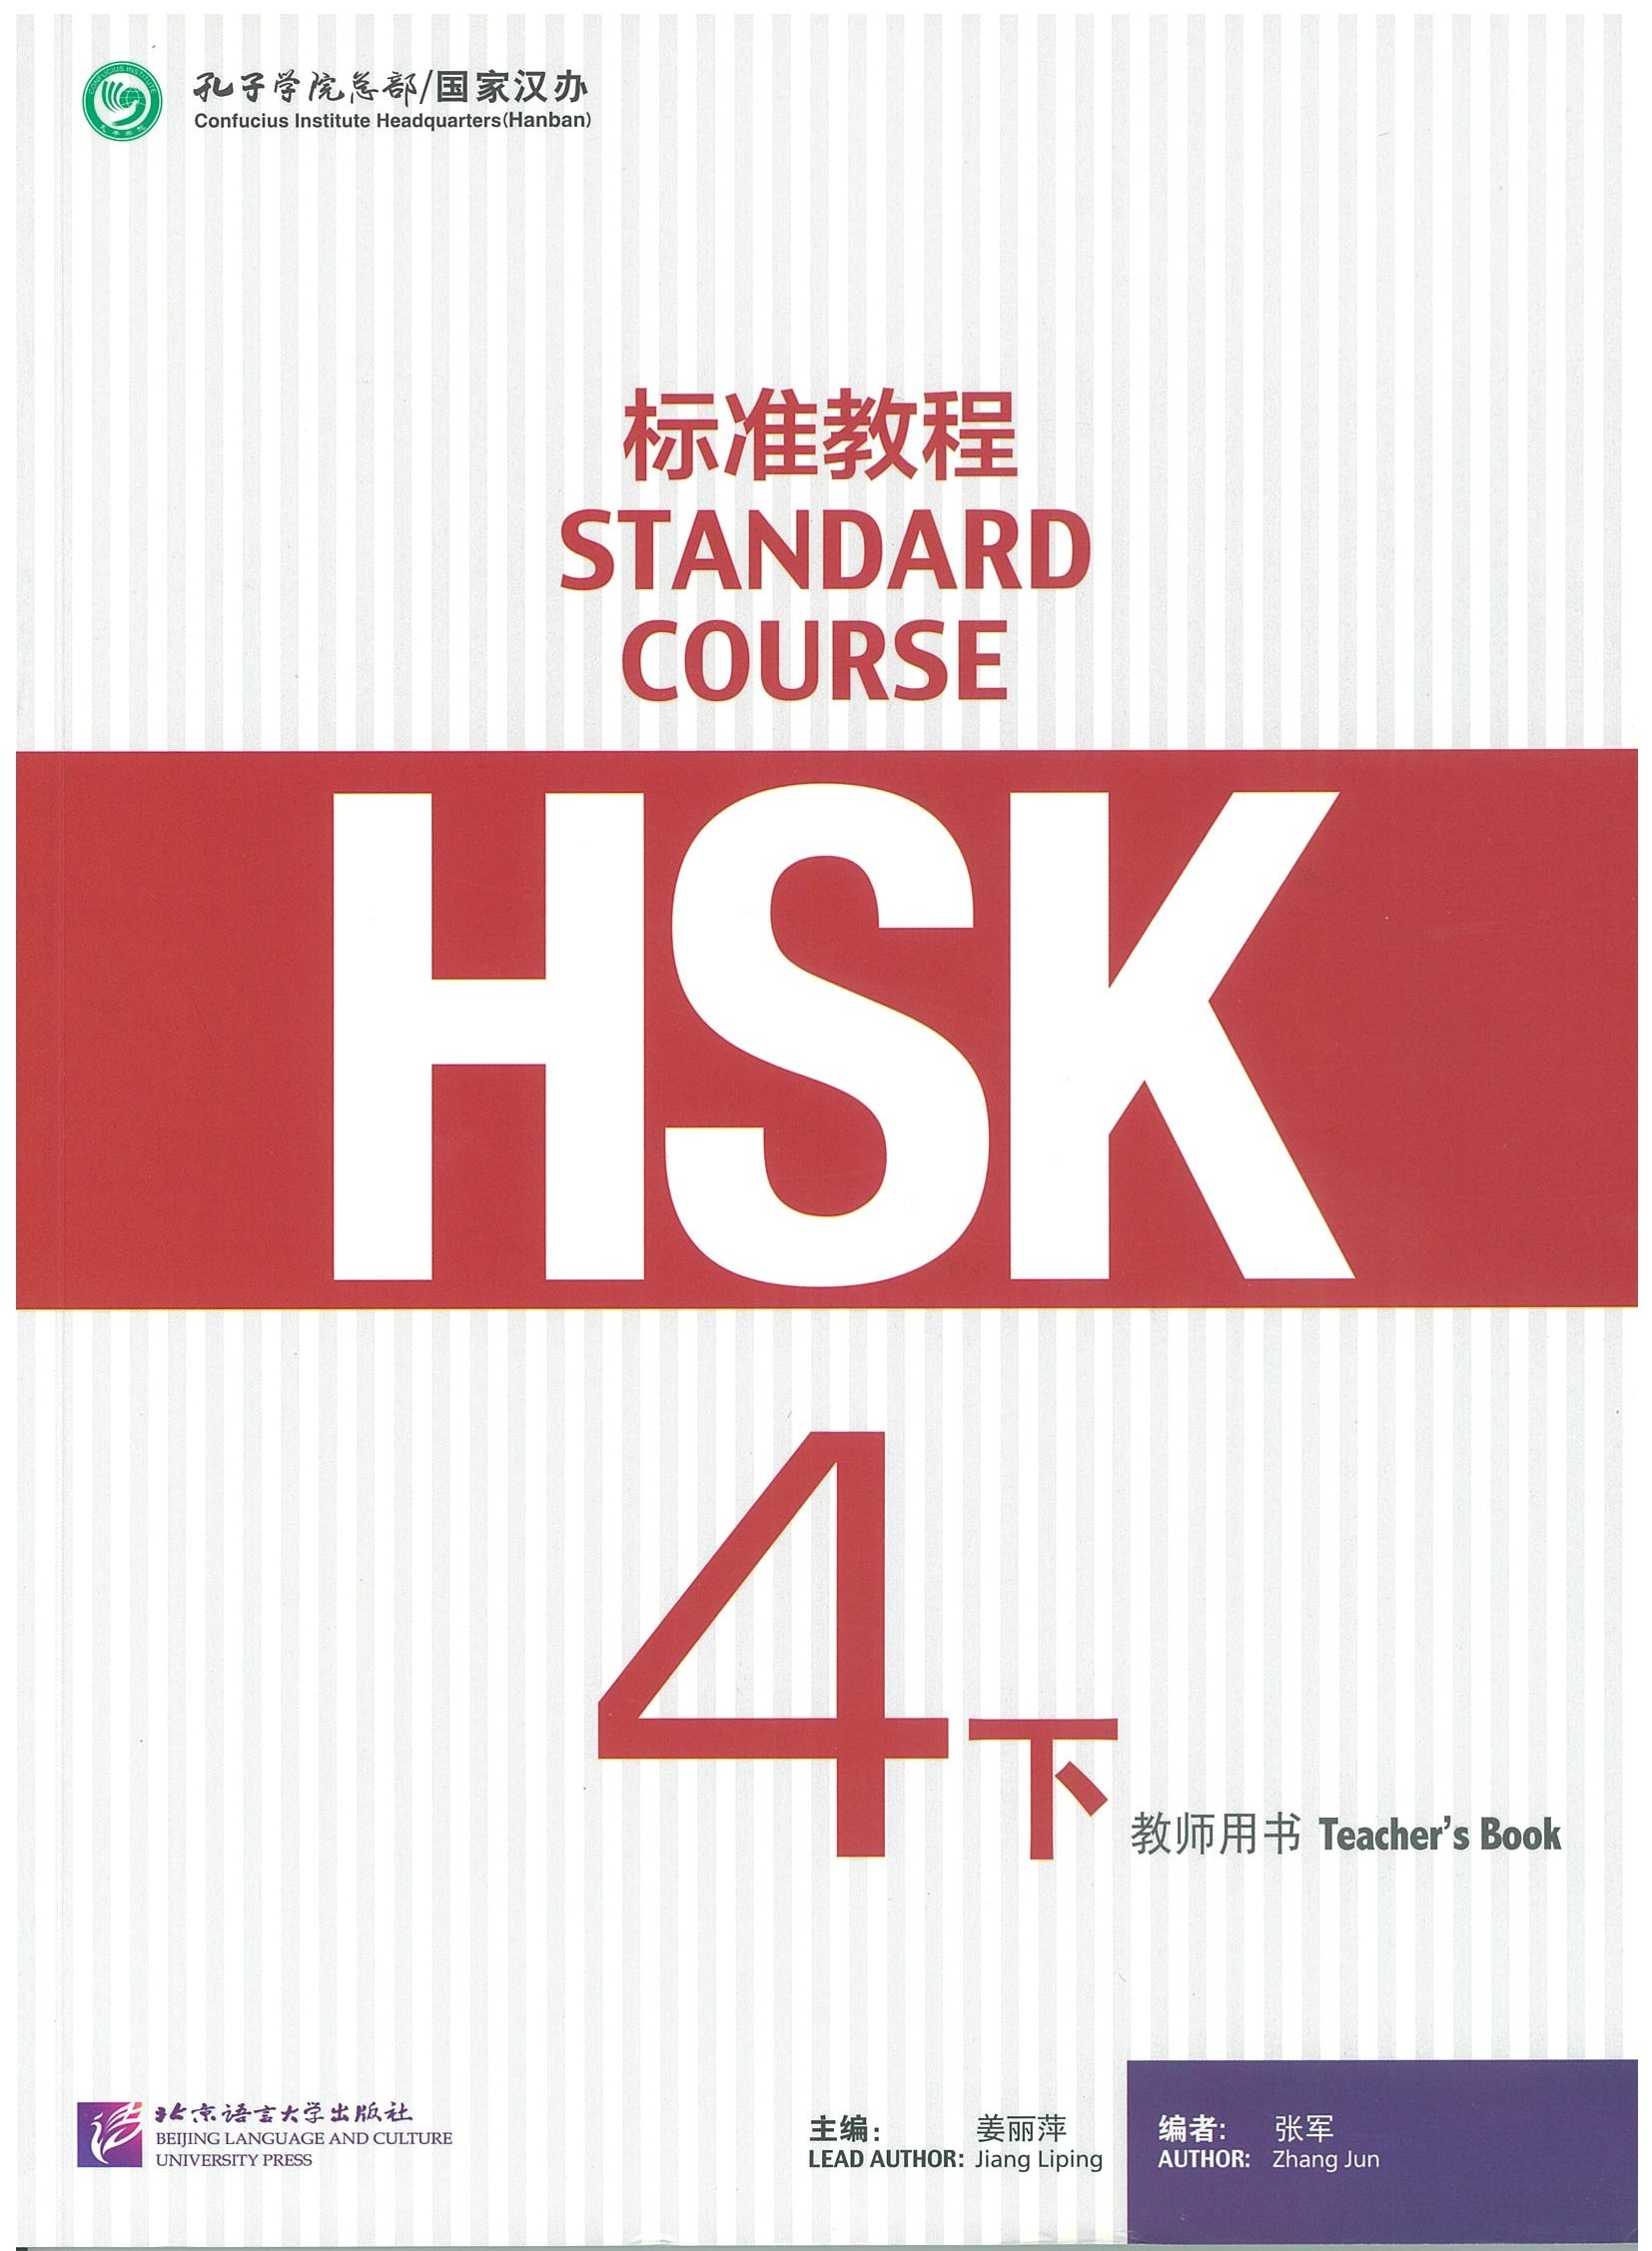 Stand Couse HSK 4B Teacher's Book 标准教程 4下 教师用书